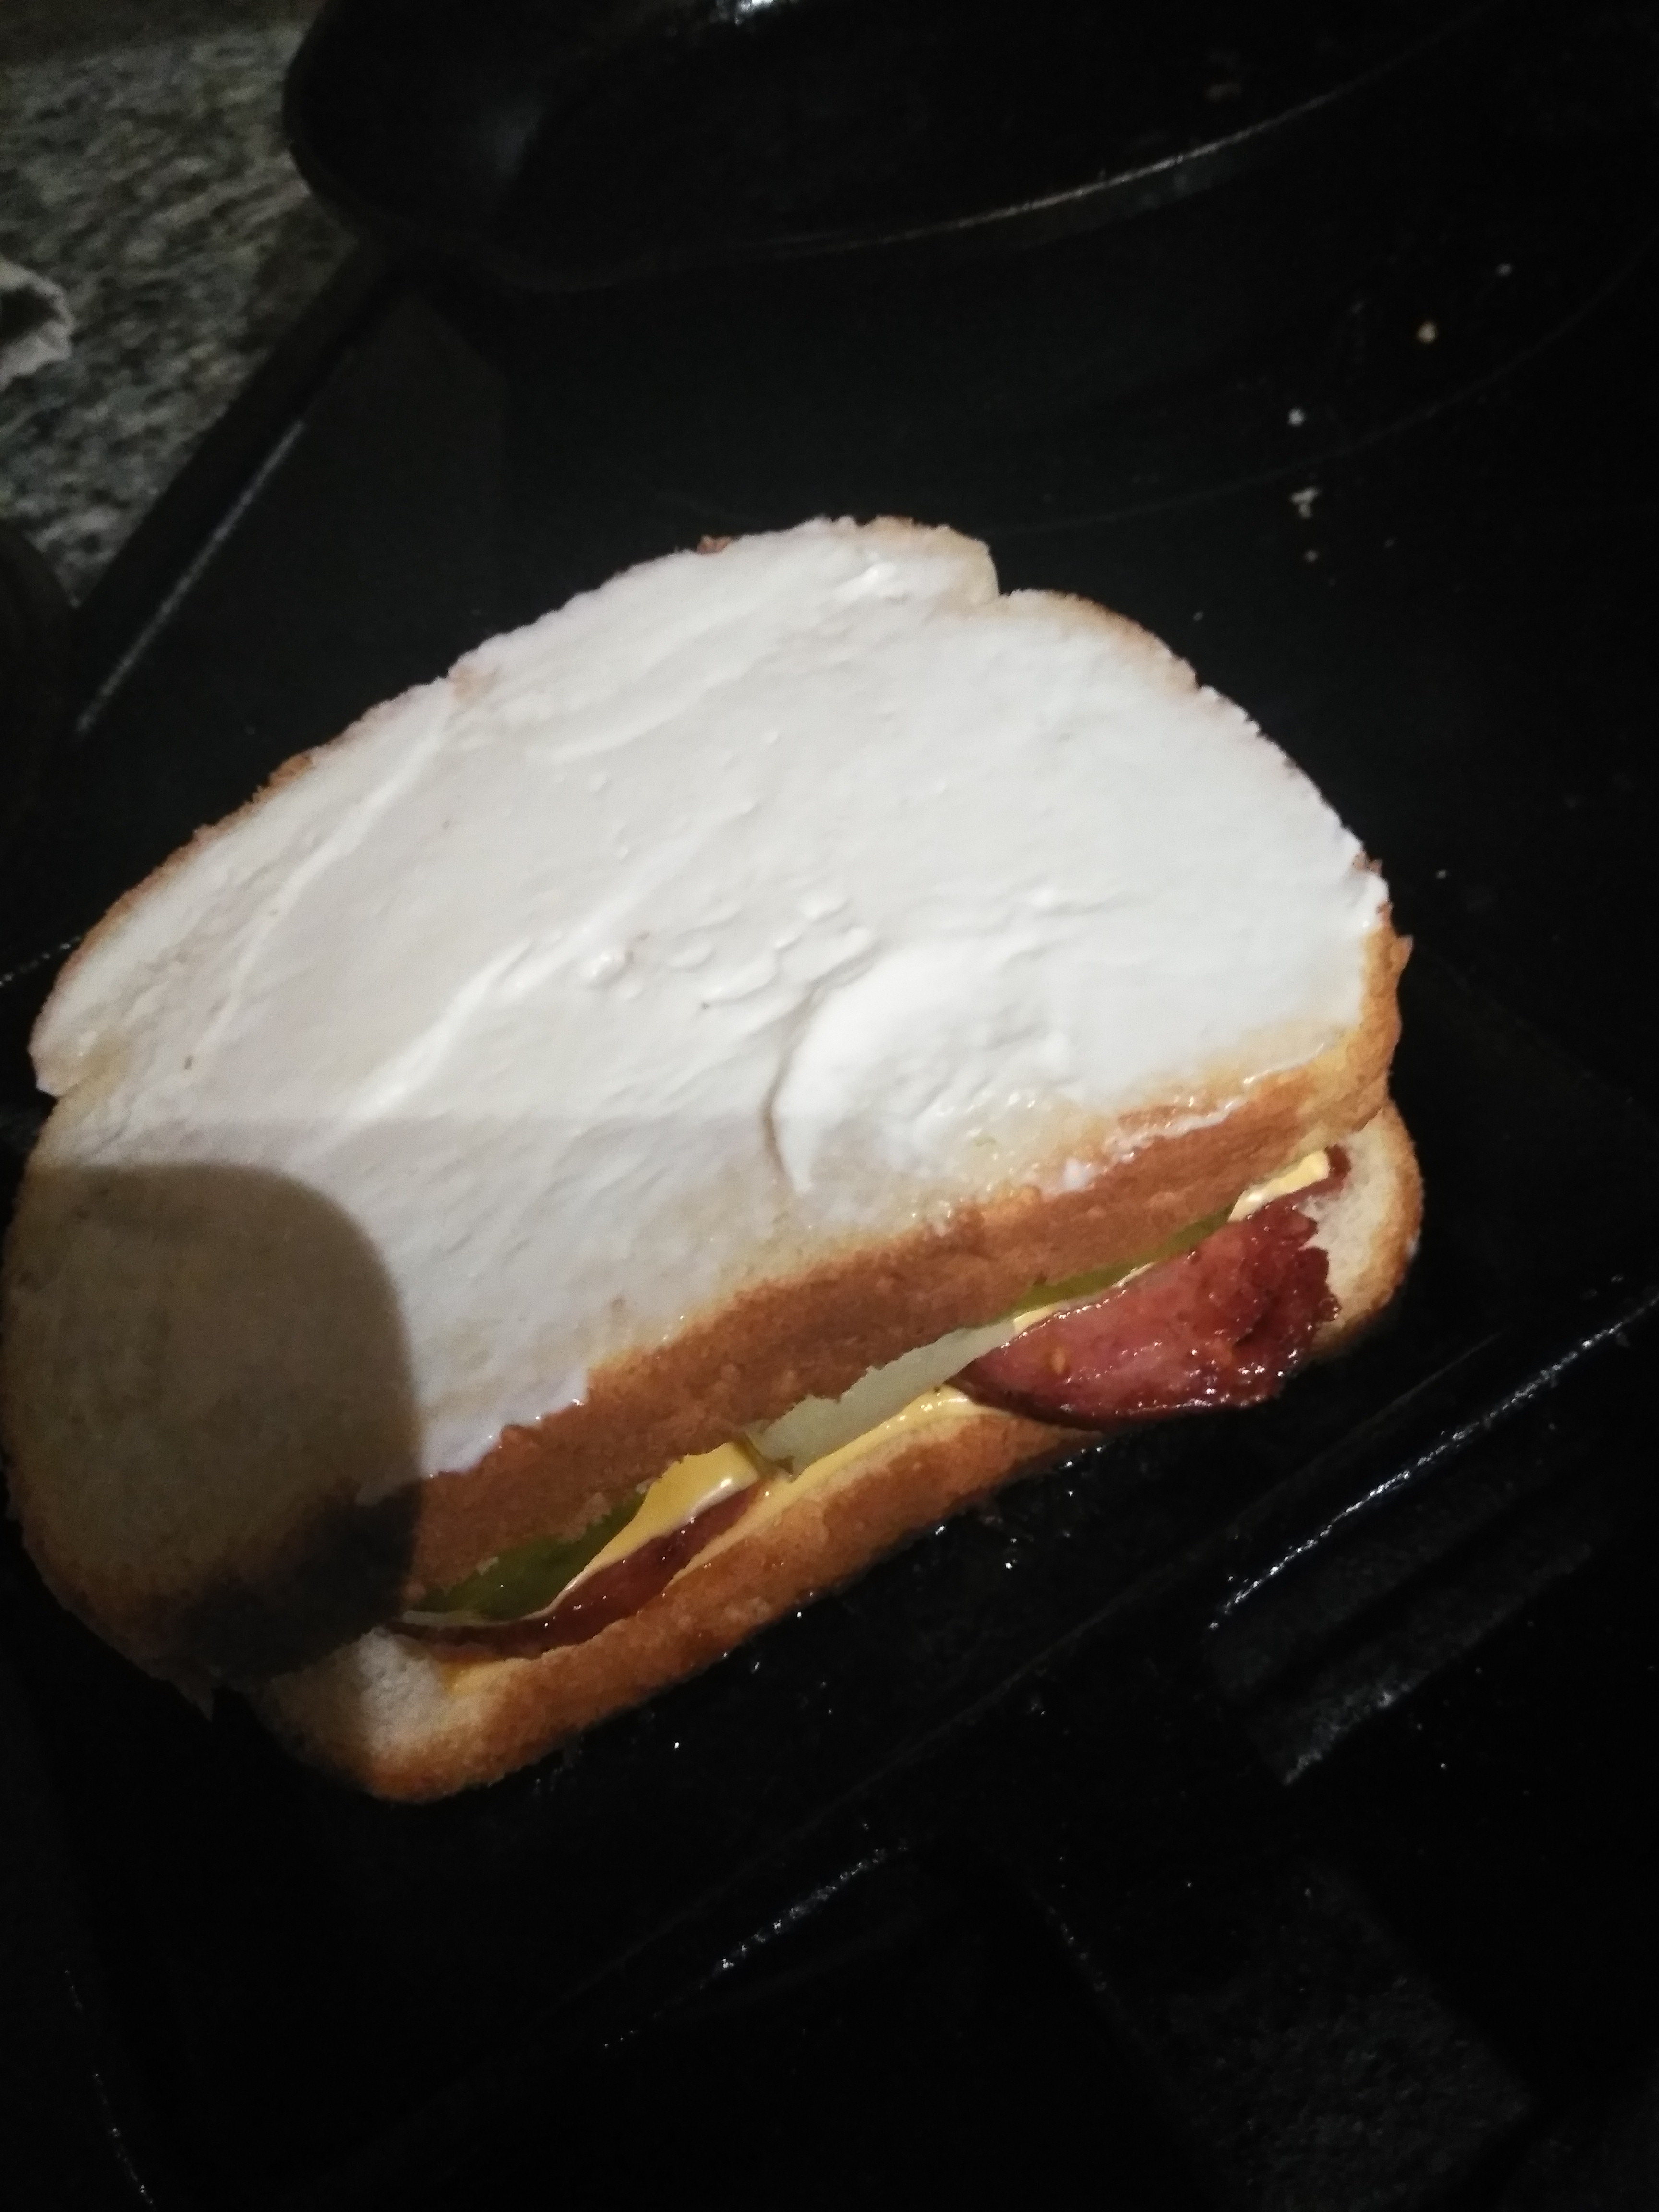 mayo on bread